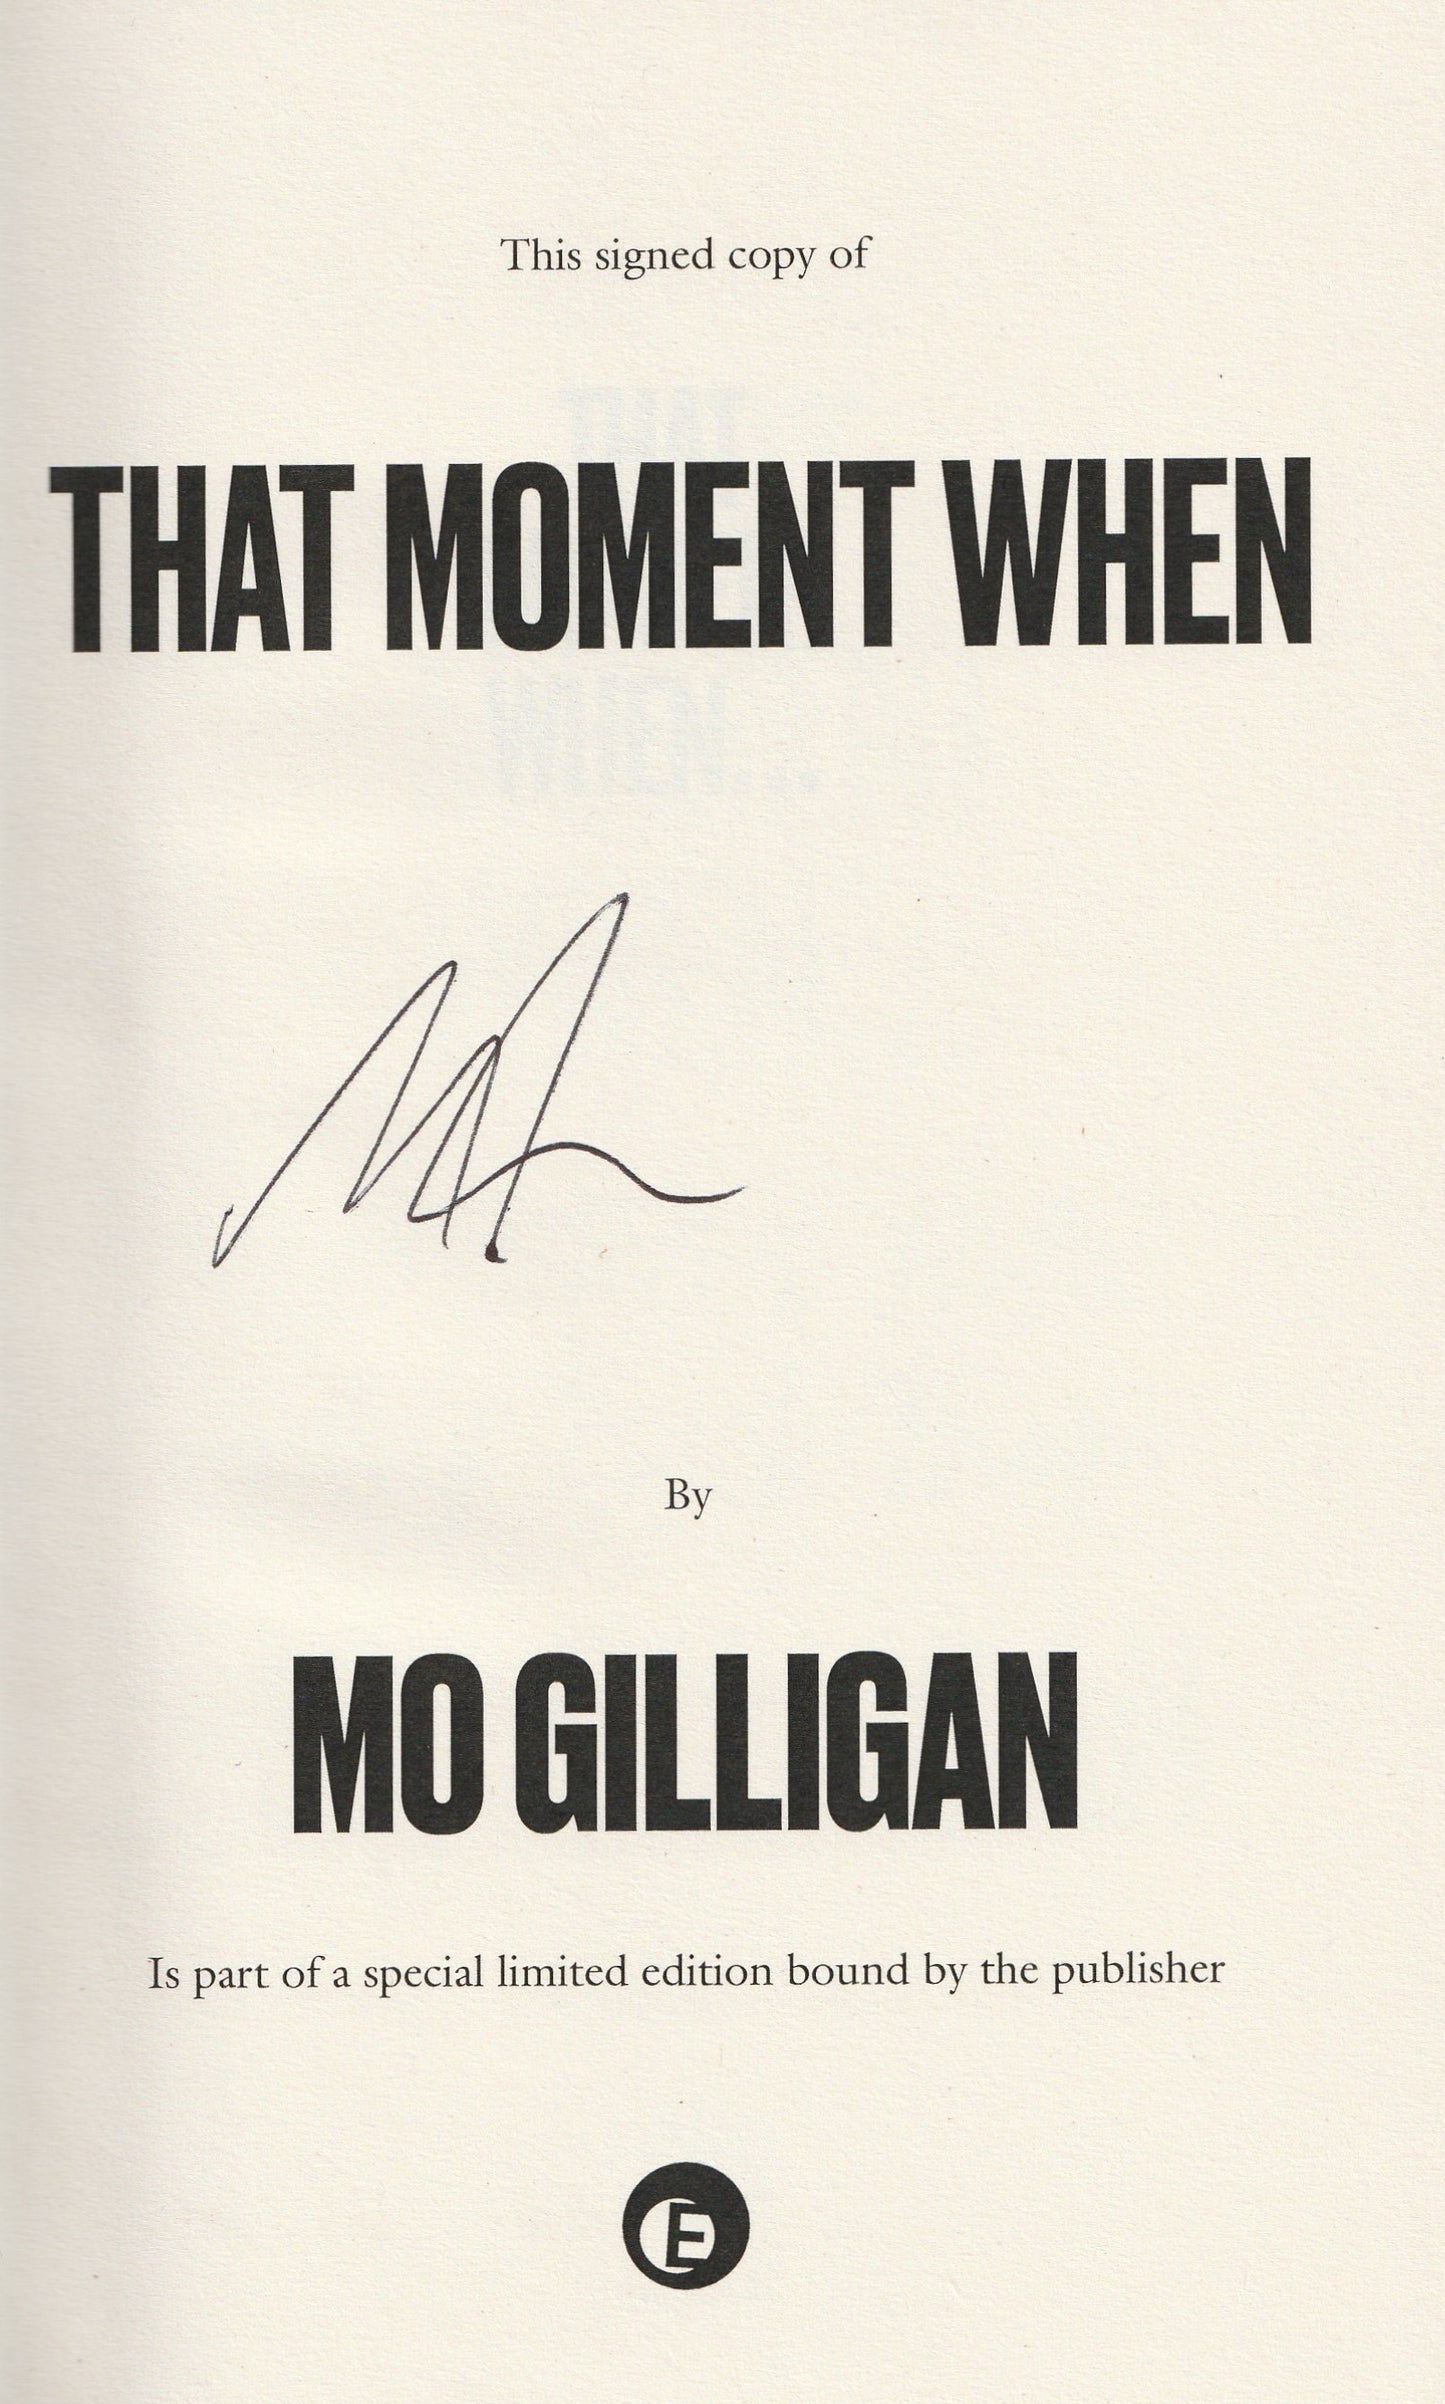 Mo Gilligan